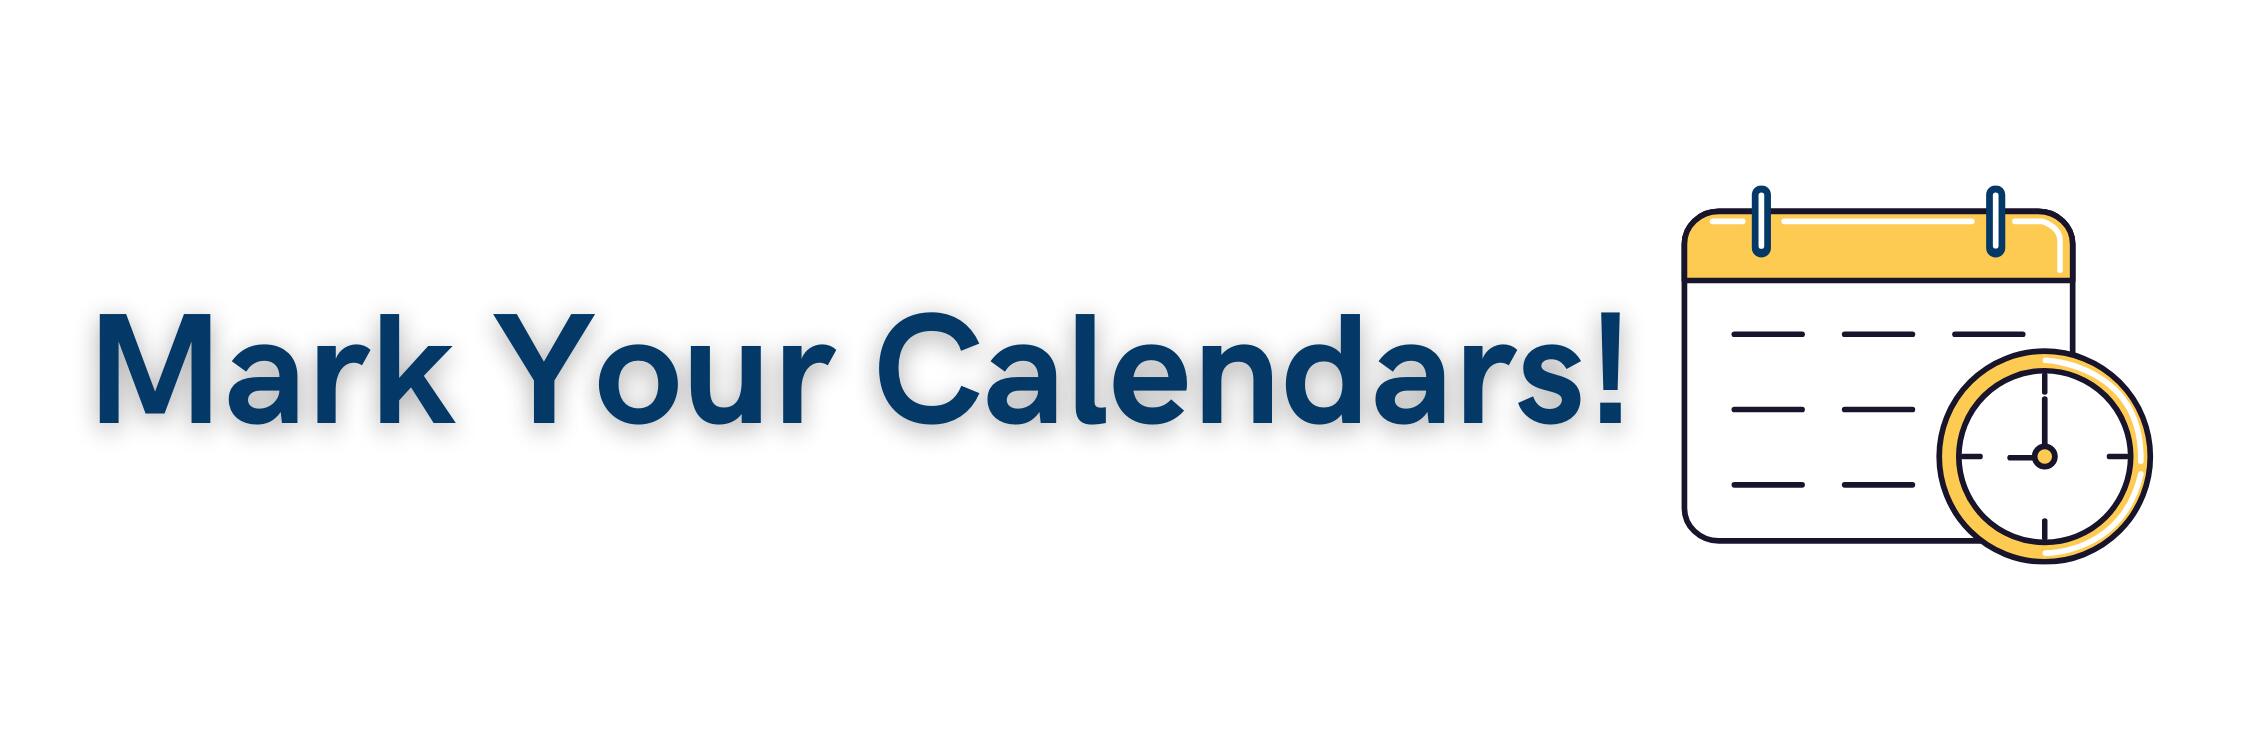 Mark your Calendar graphic